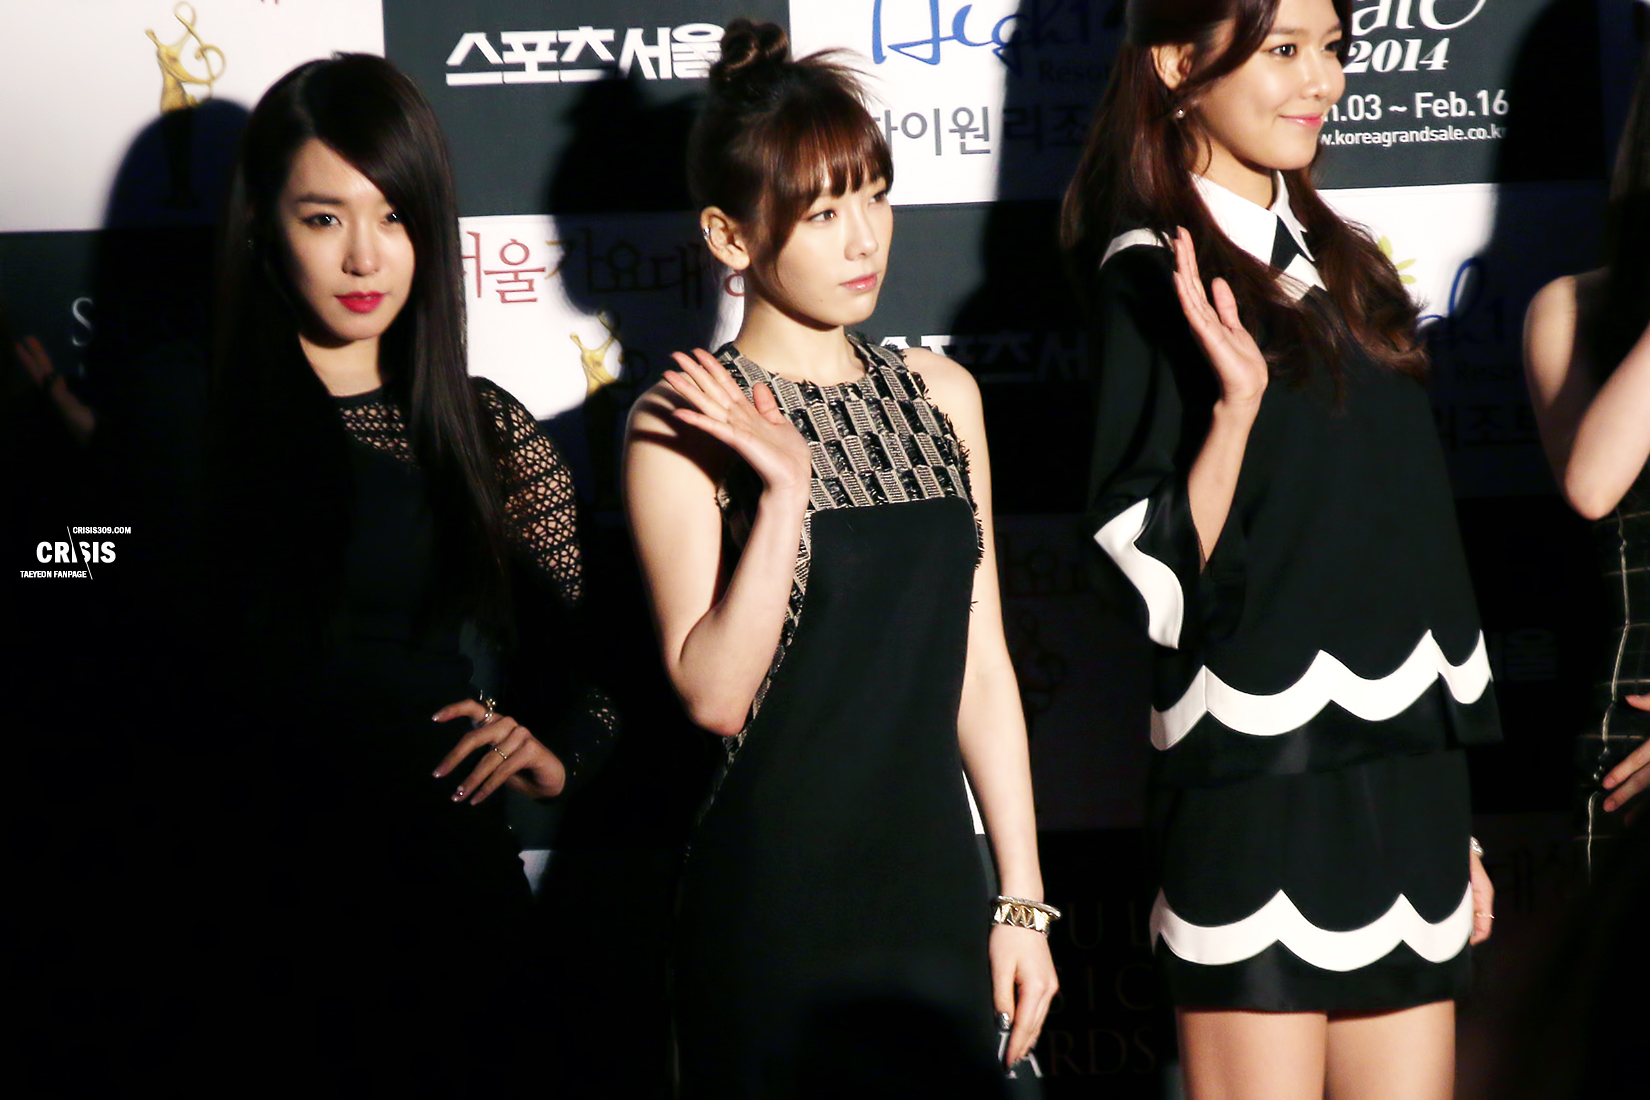 [PIC][23-01-2014]SNSD tham dự "23rd Seoul Music Awards" vào tối nay - Page 6 2134EB4352E146831AAB1A